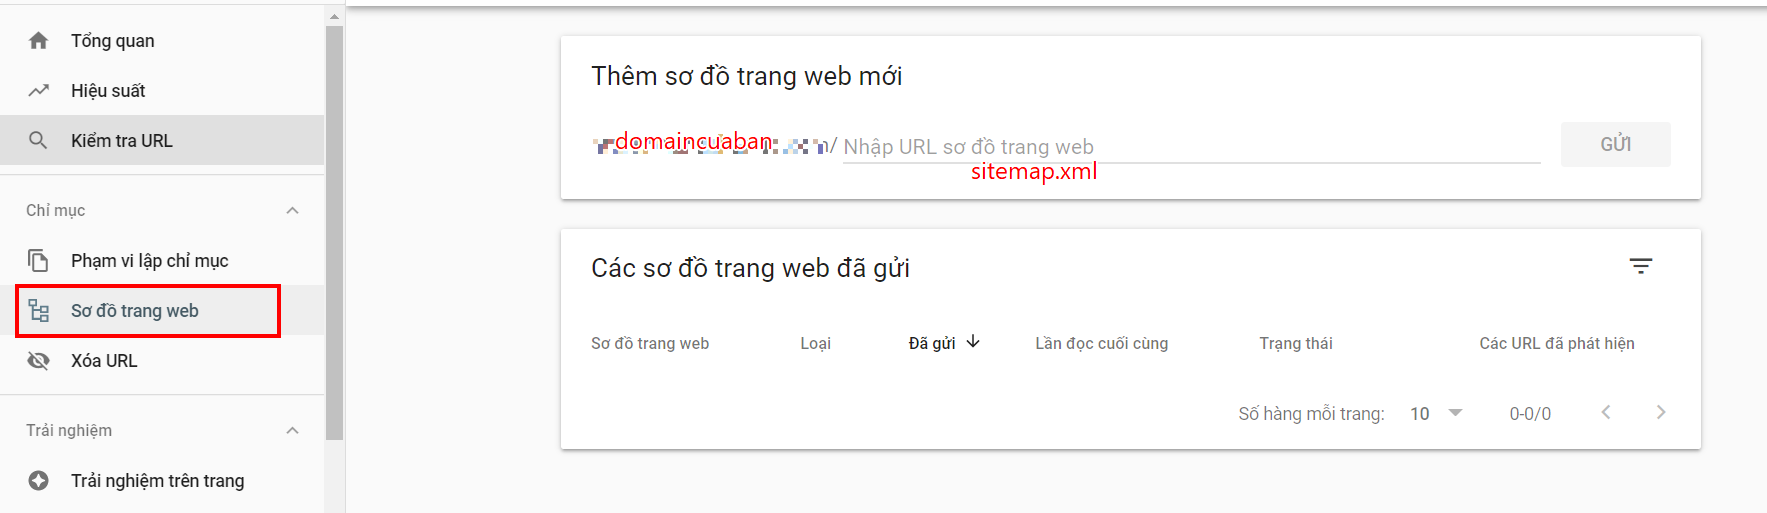 gui-sitemap-google-search-console-1